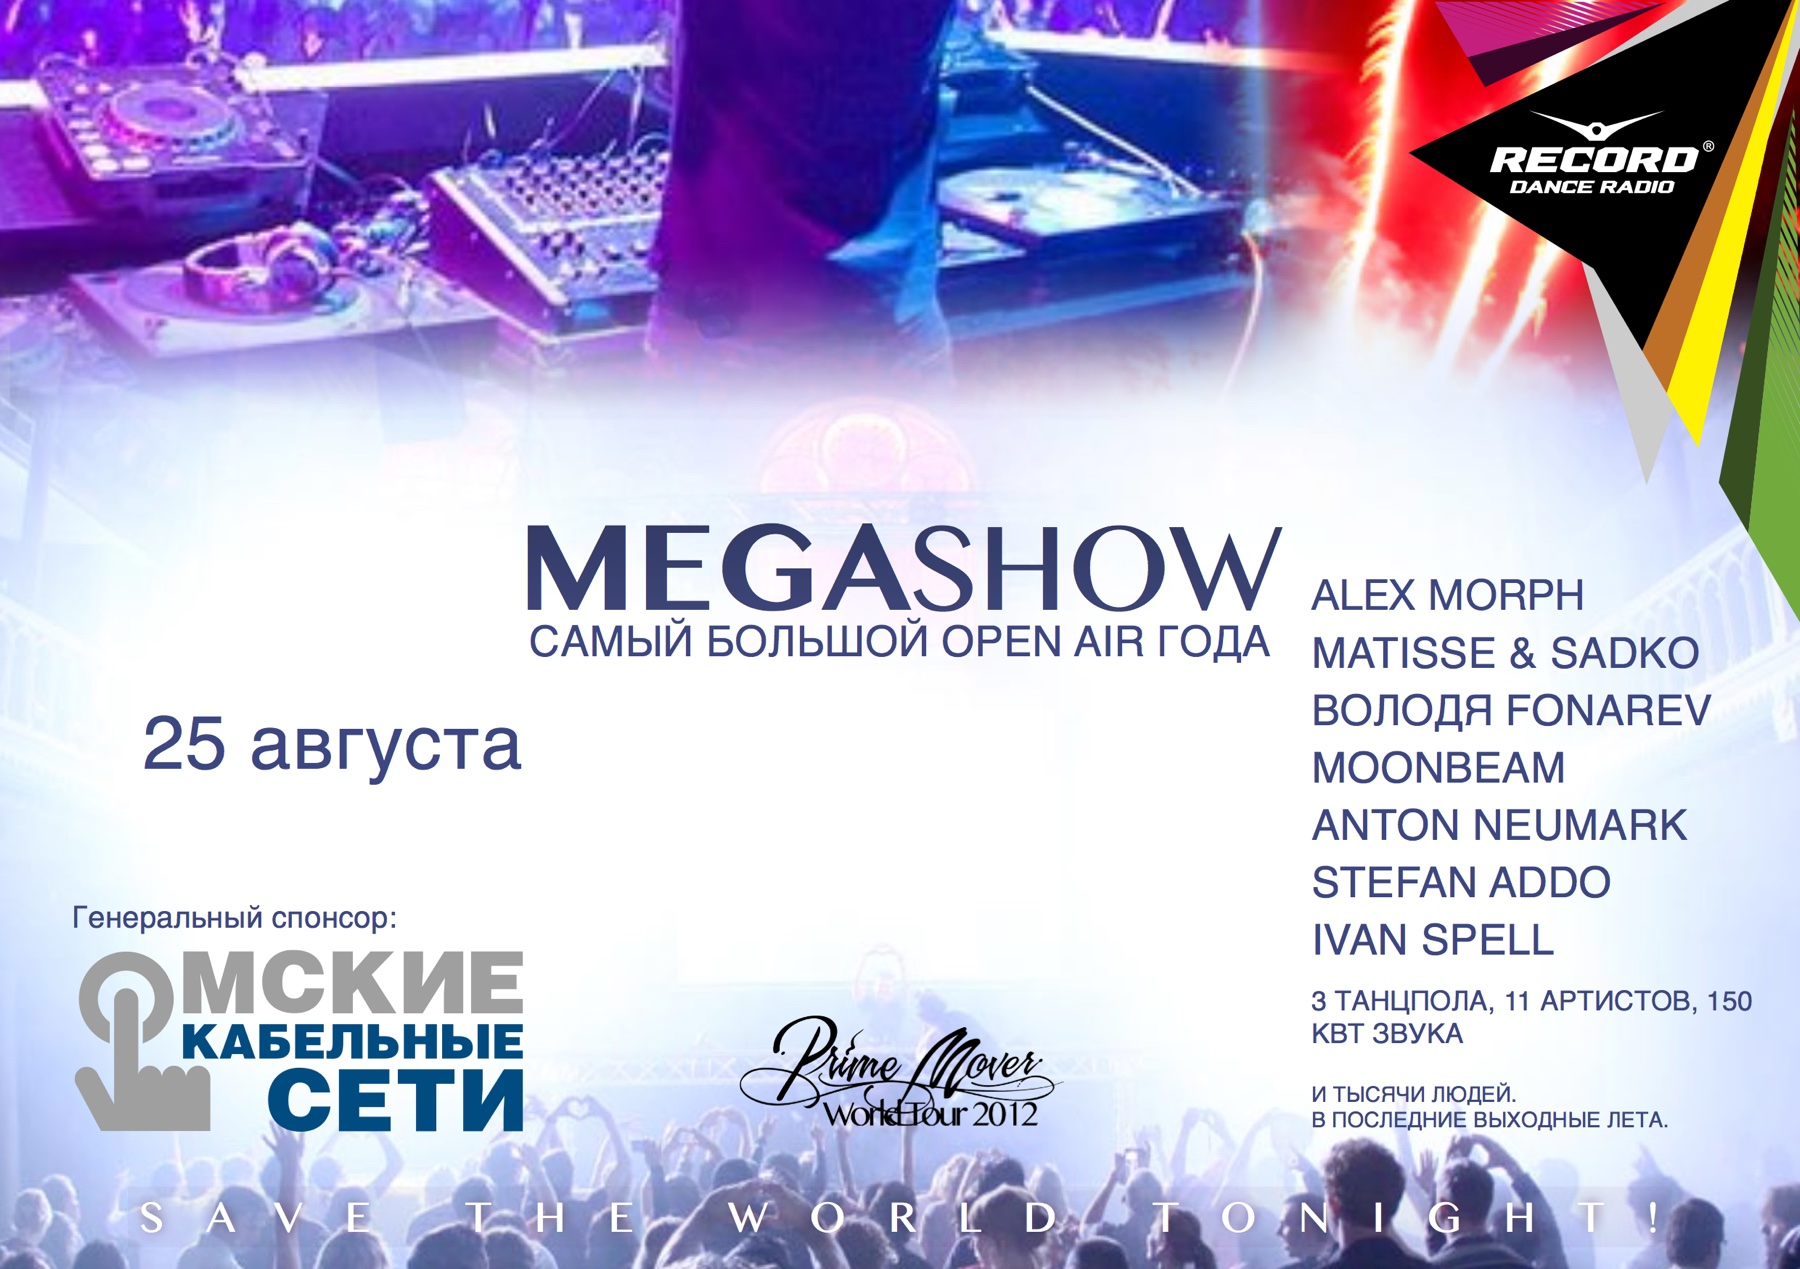 Megashow листовка 2012 самый большой open air года 25 августа 2012 Omsk Омск Олег Борисов Oleg Borisov Москва Moscow